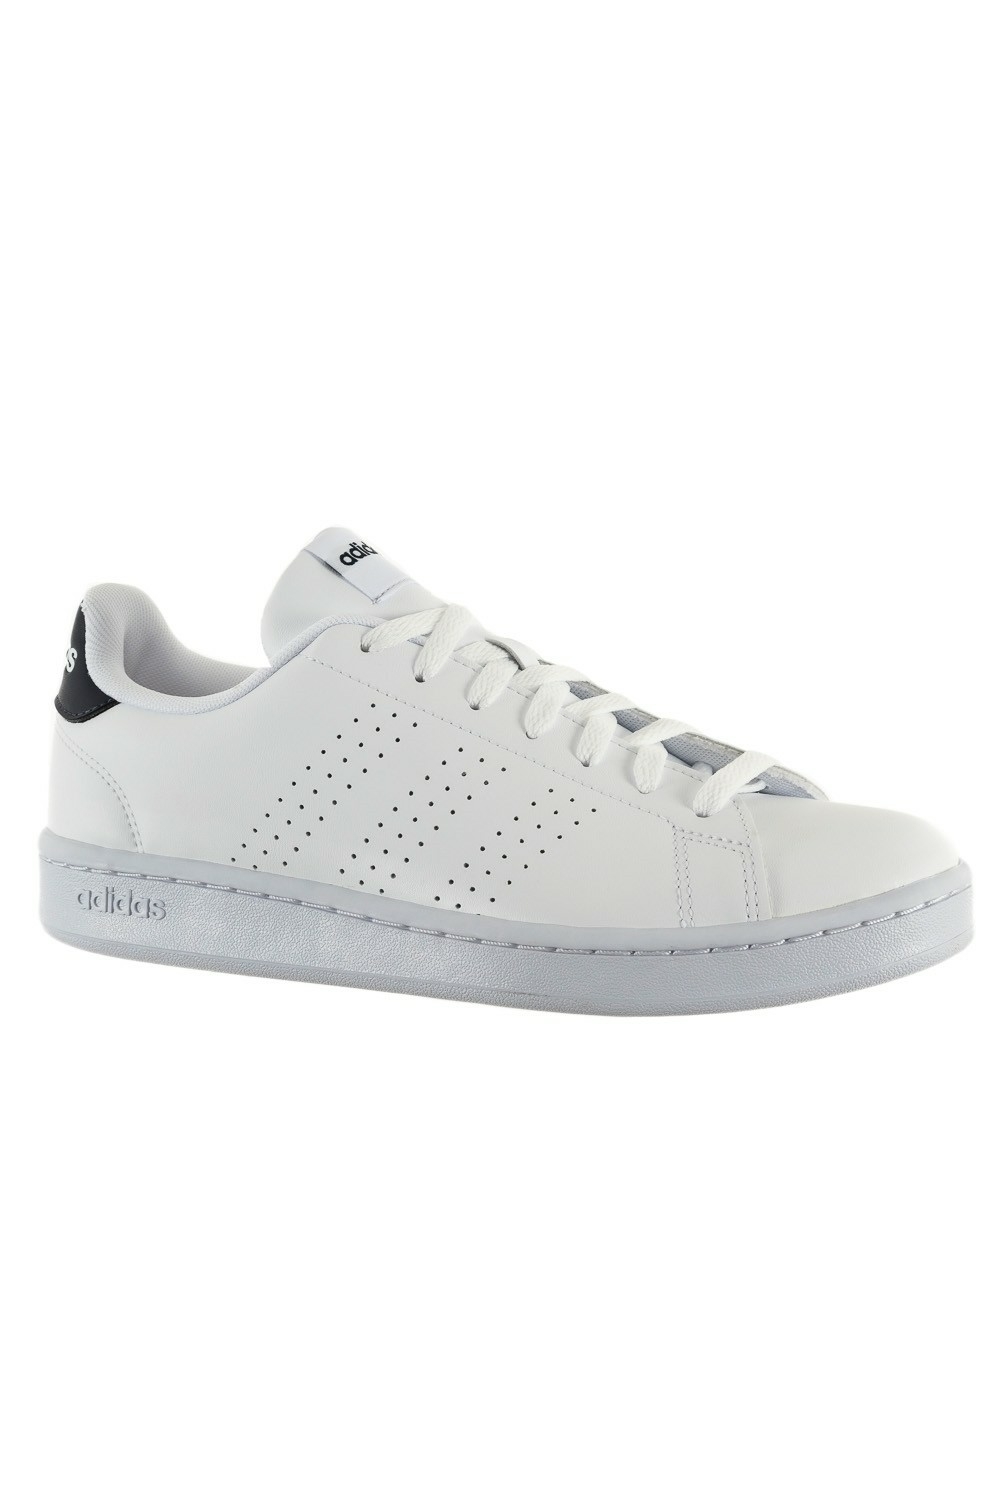 adidas Originals ADVANTAGE - Baskets basses - white/blanc 